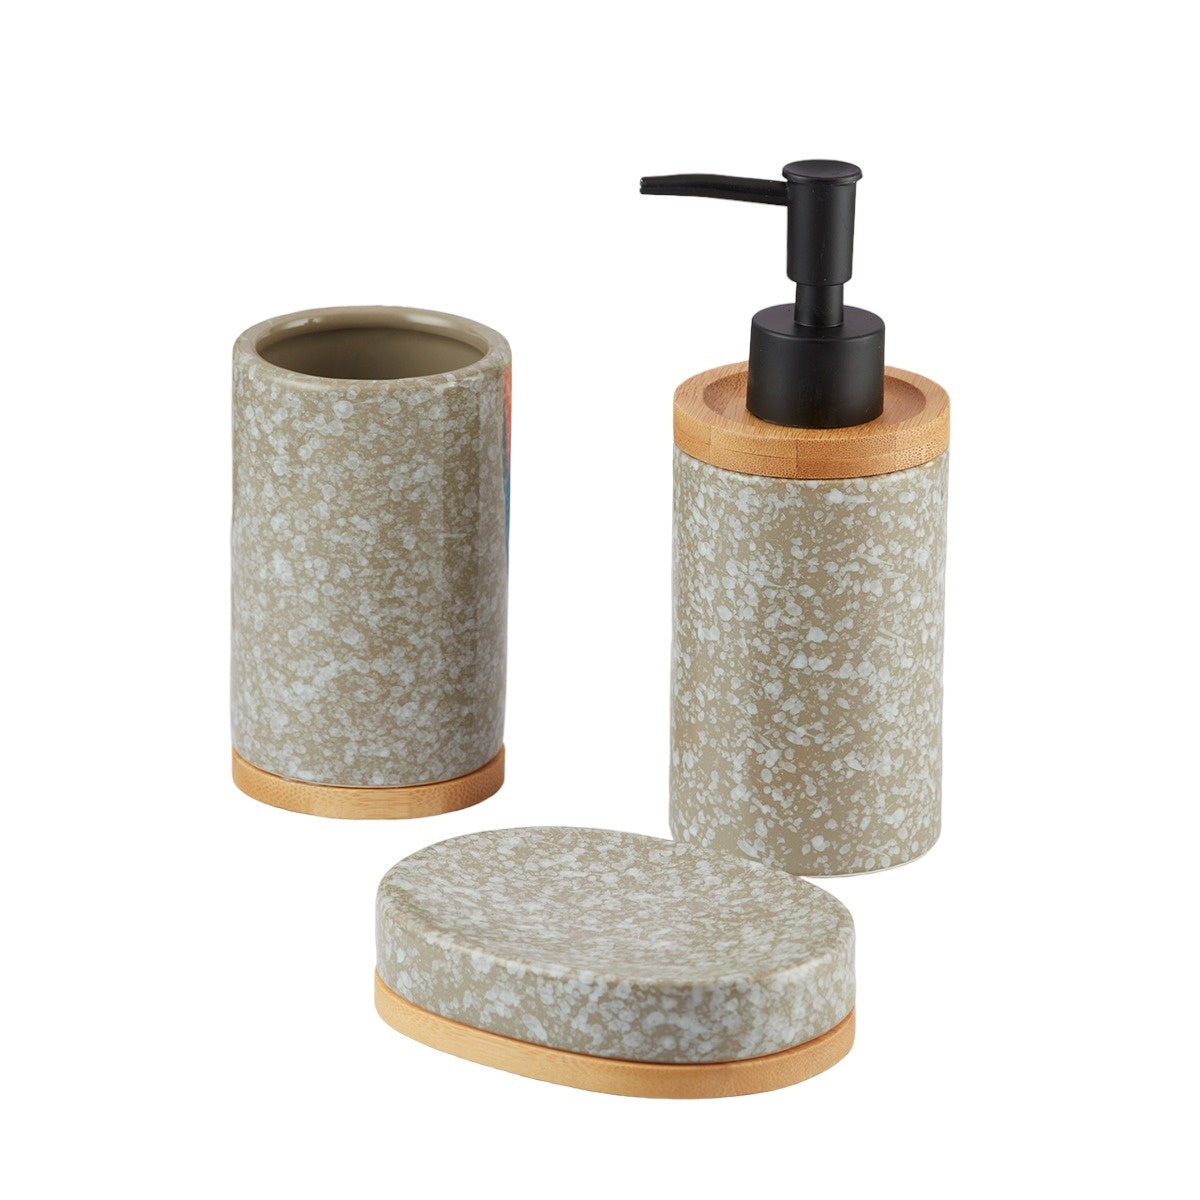 Ceramic Bathroom Accessories Set of 3 Bath Set with Soap Dispenser (9617)